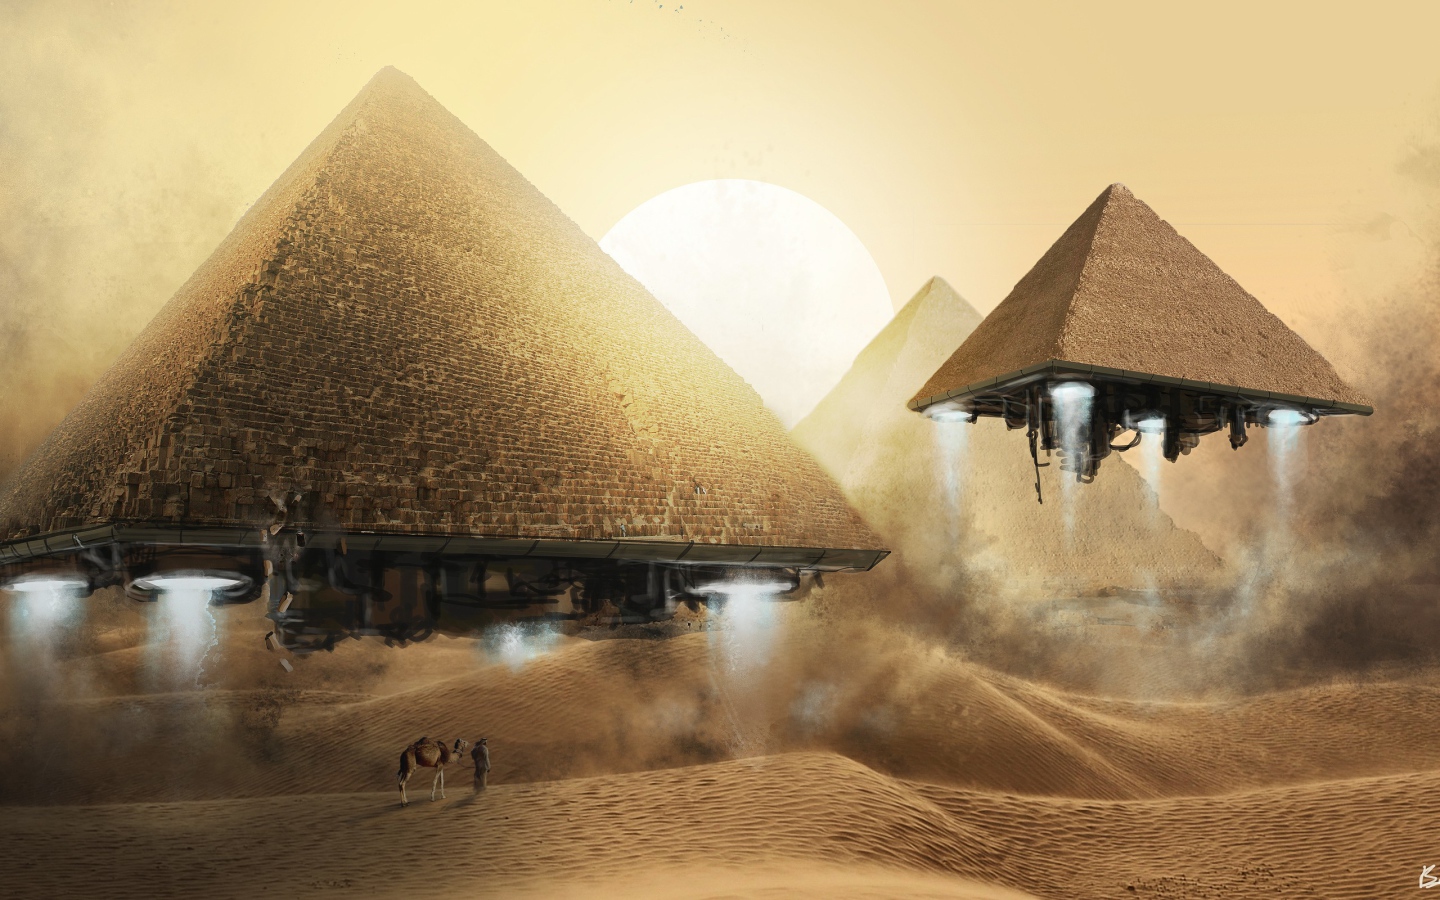 Flying pyramids